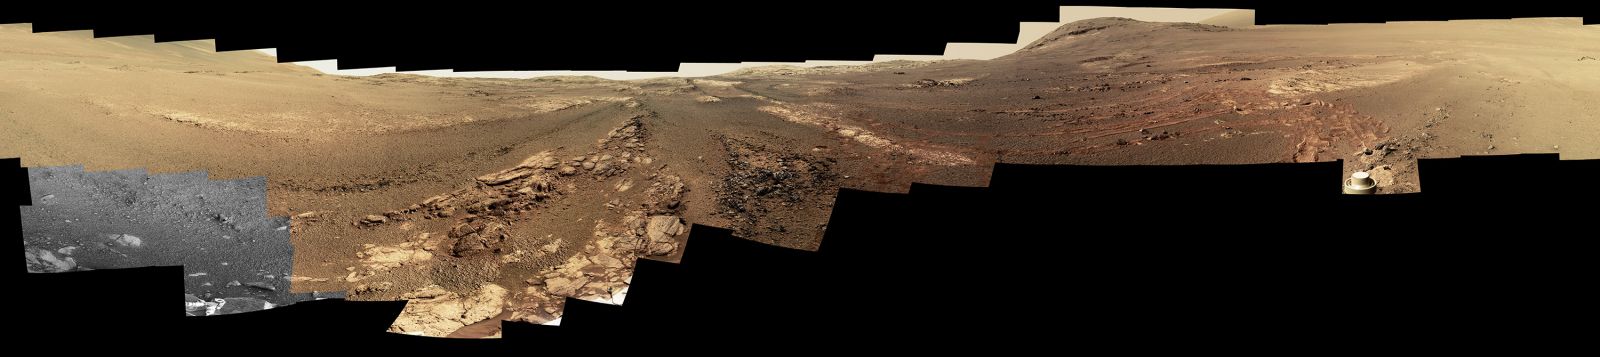 Последняя панорама, сделанная марсоходом «Опортьюнити». Фото: NASA